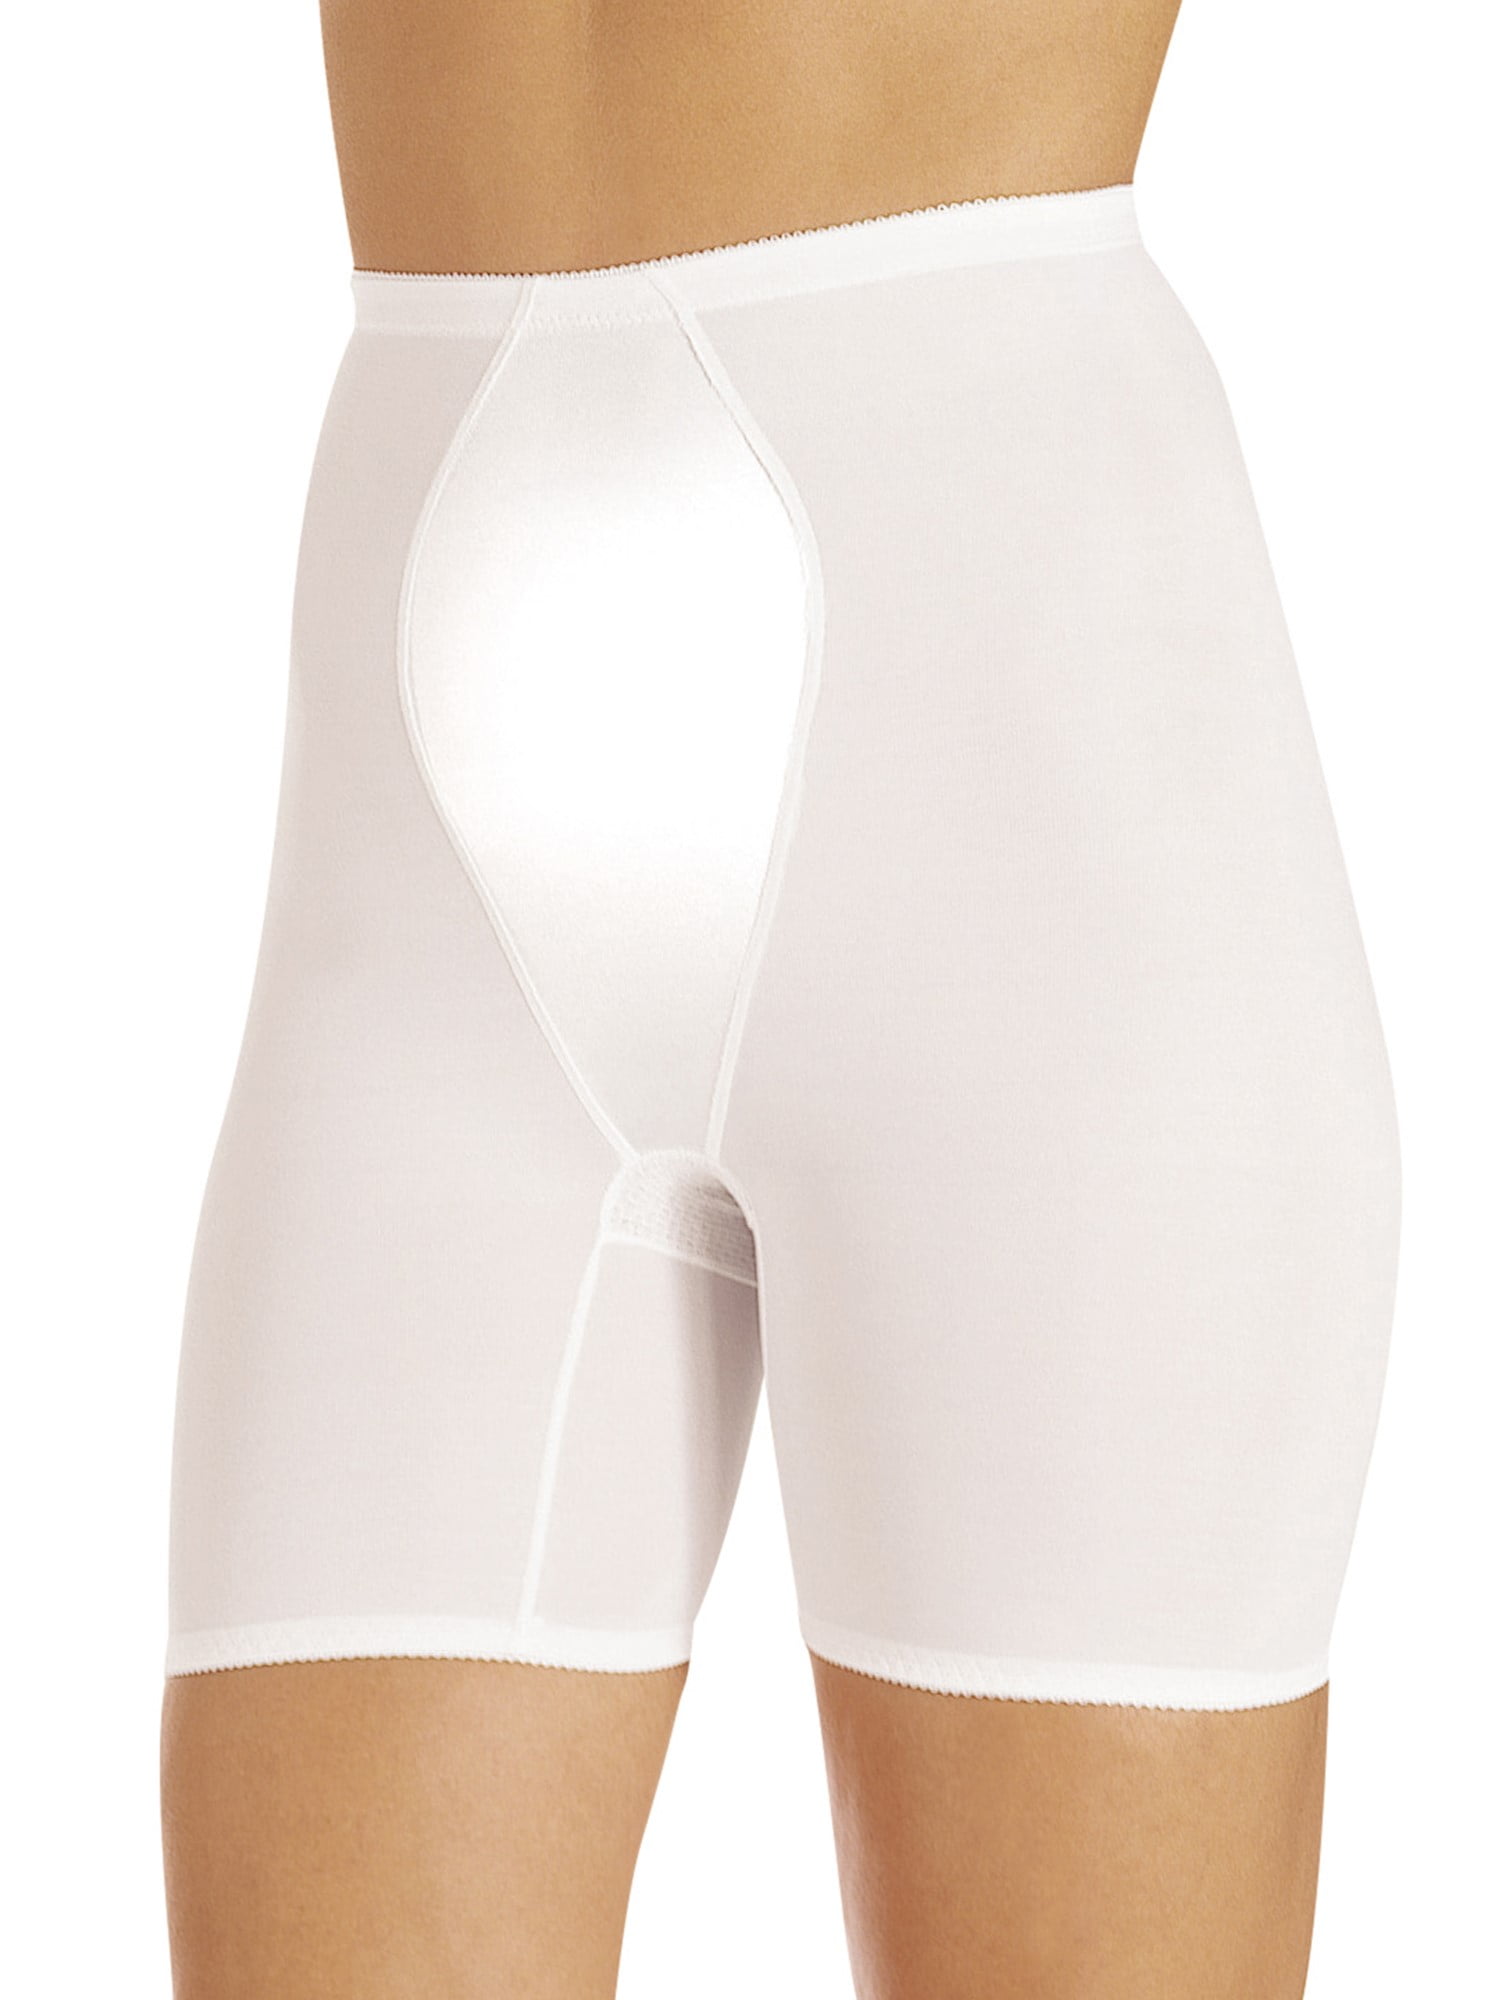 Cupid Women's Extra Firm Control Comfort Leg Waistline Panty Brief